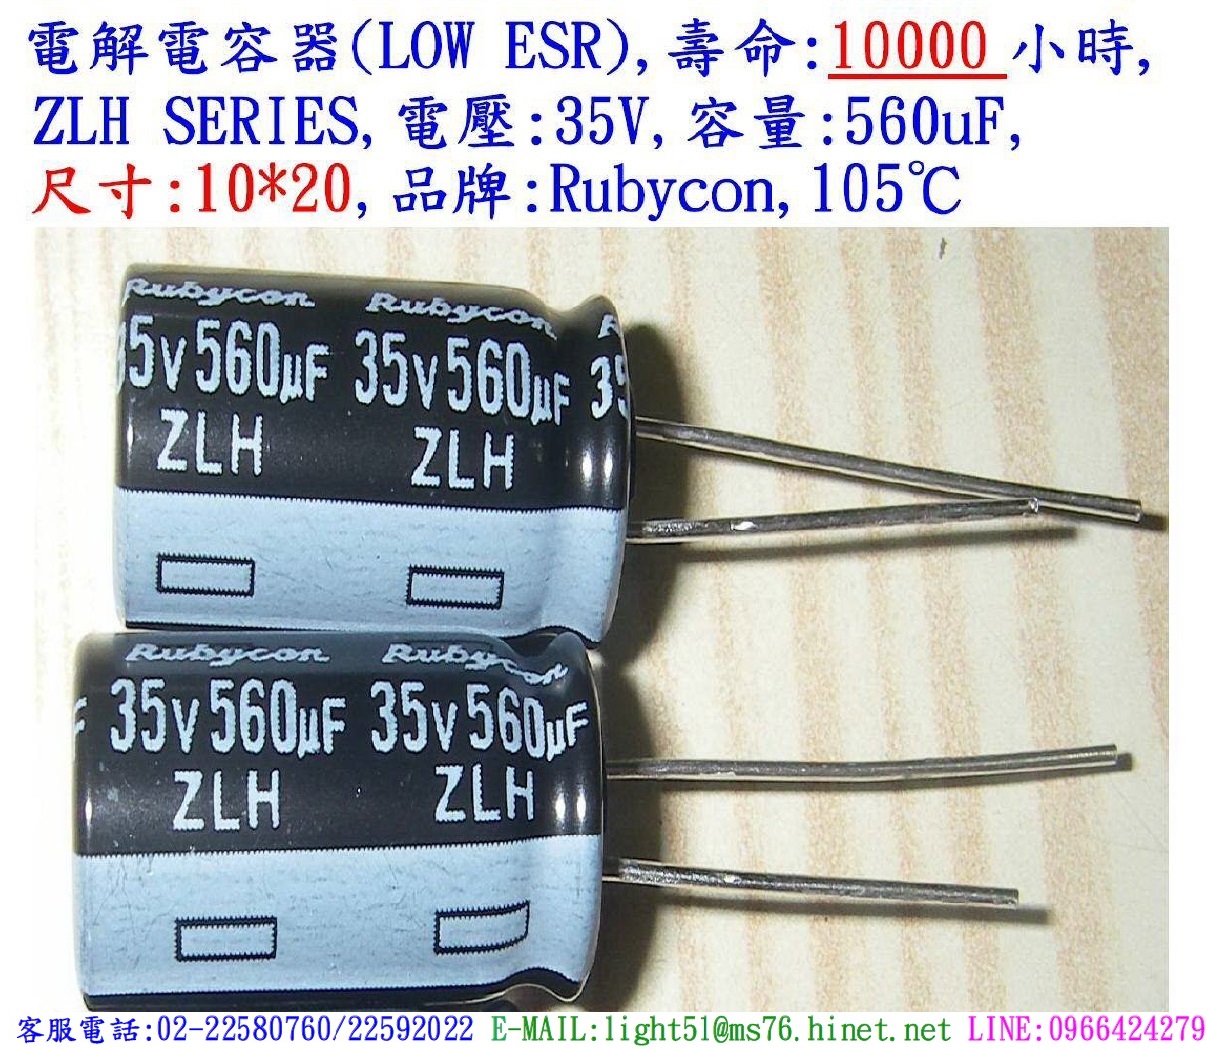 ZLH,35V,560uF,尺寸:10*20,電解電容器(LOW ESR),壽命:10000小時,Rubycon